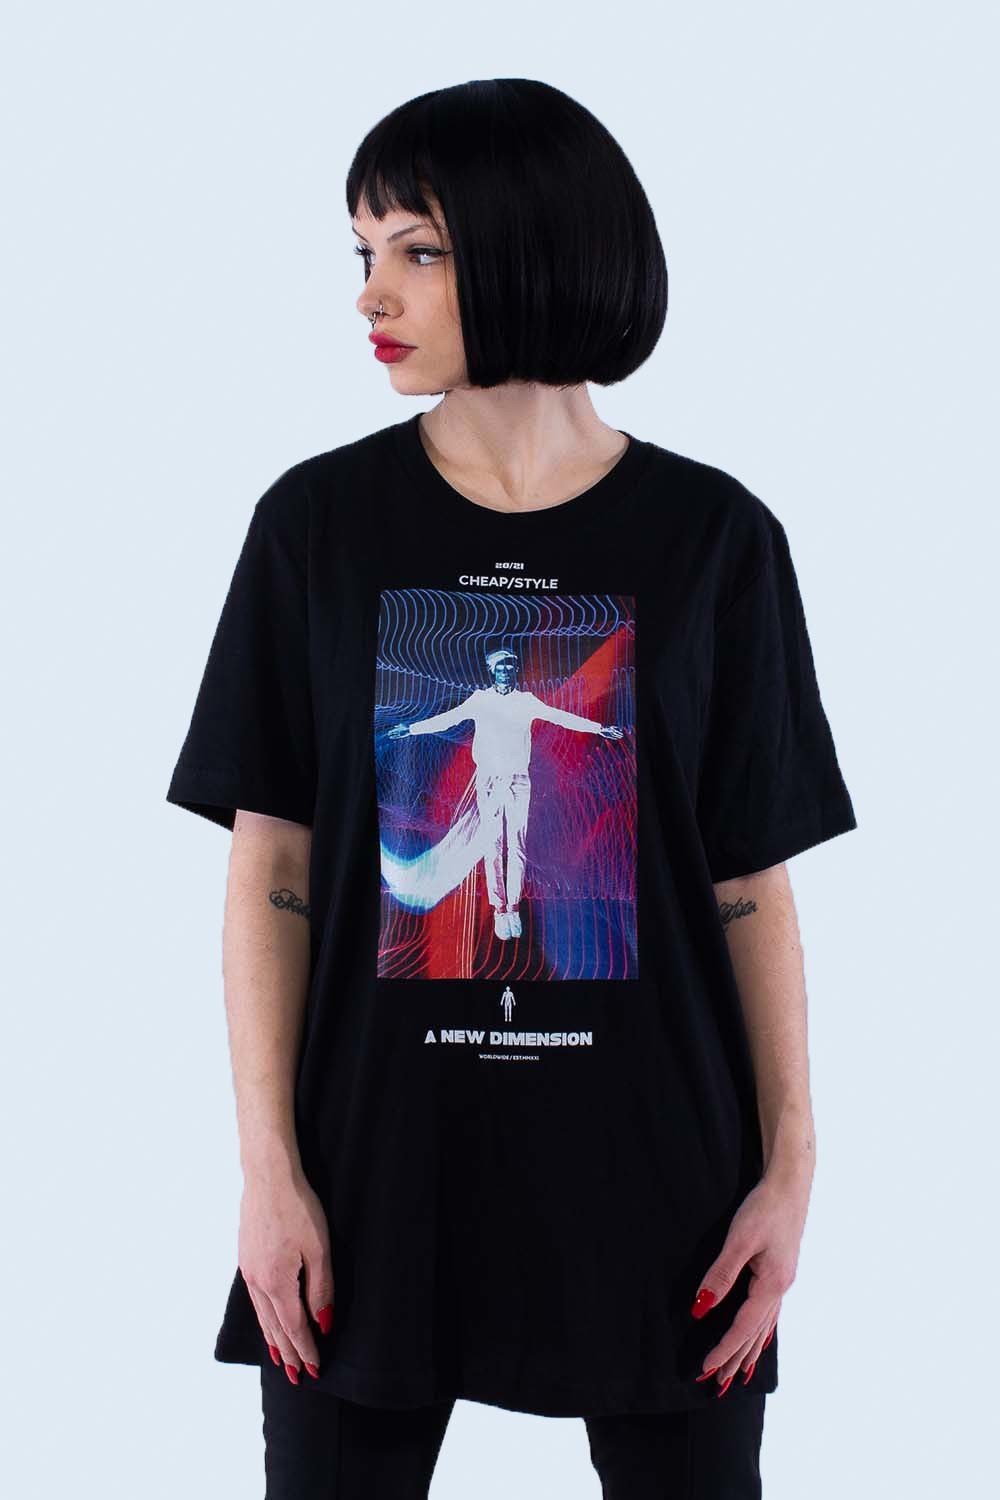 A New Dimension - Tshirt - Women